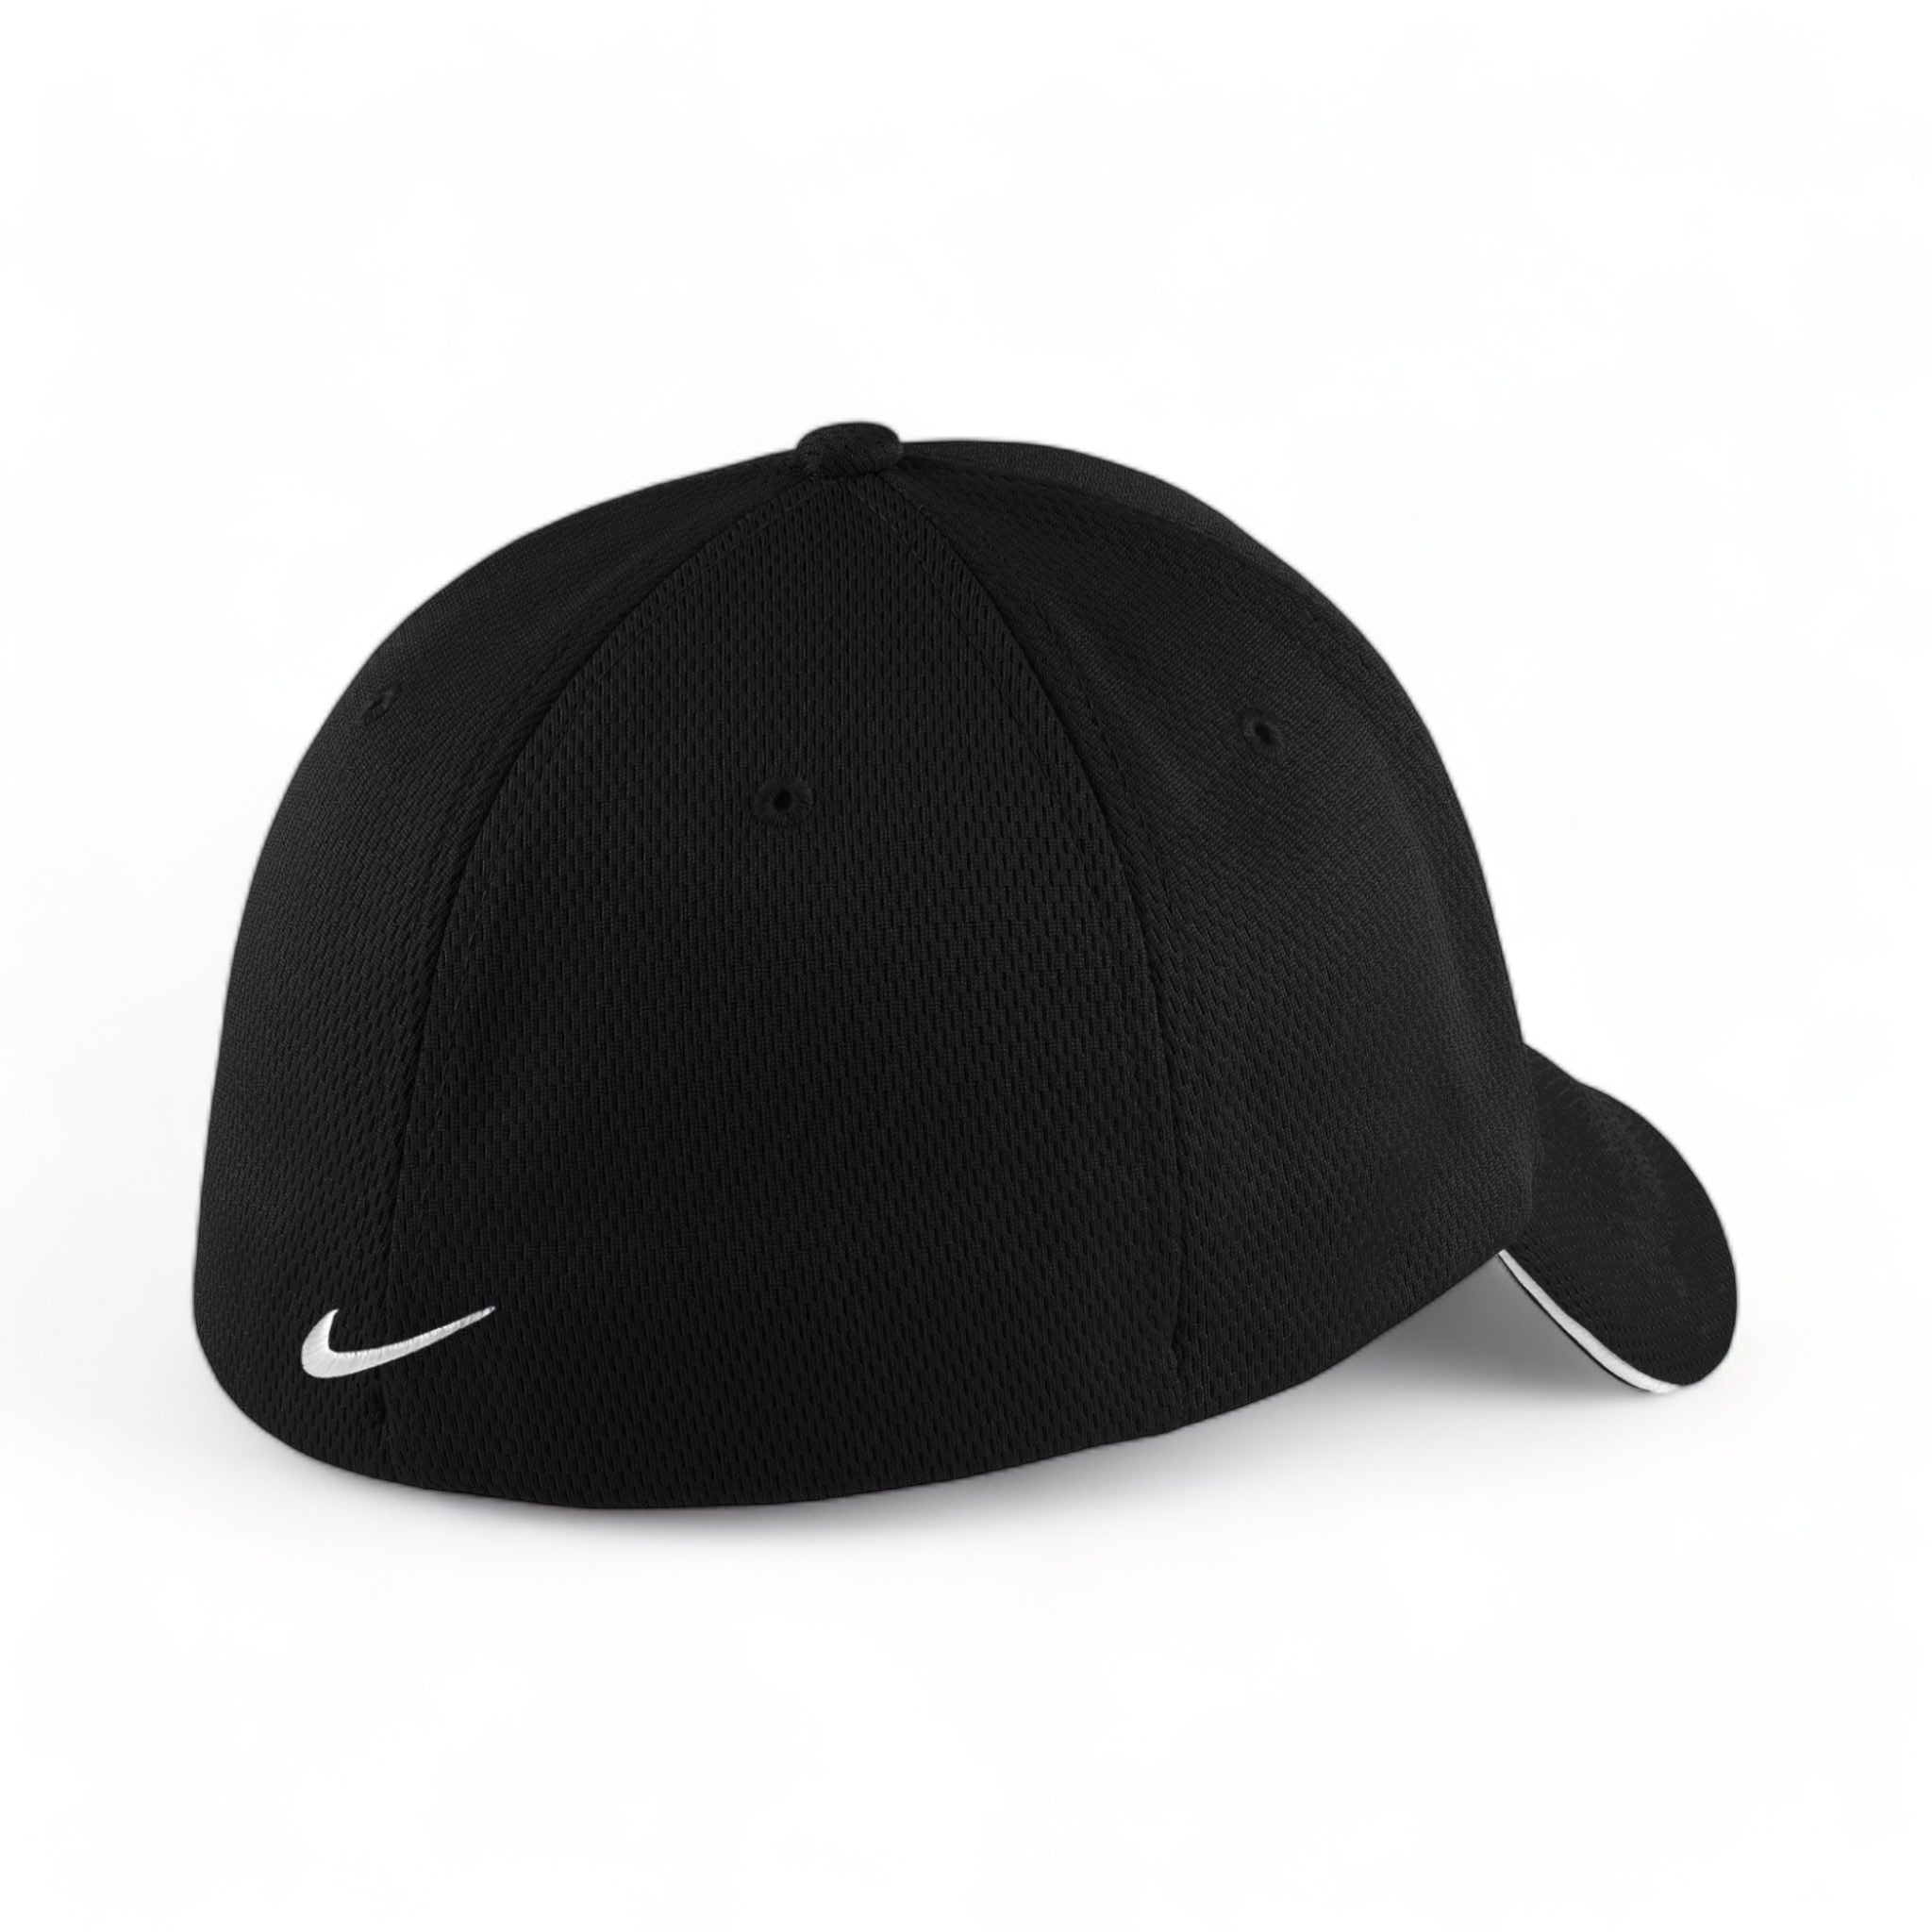 Back view of Nike NKFD9718 custom hat in black and white